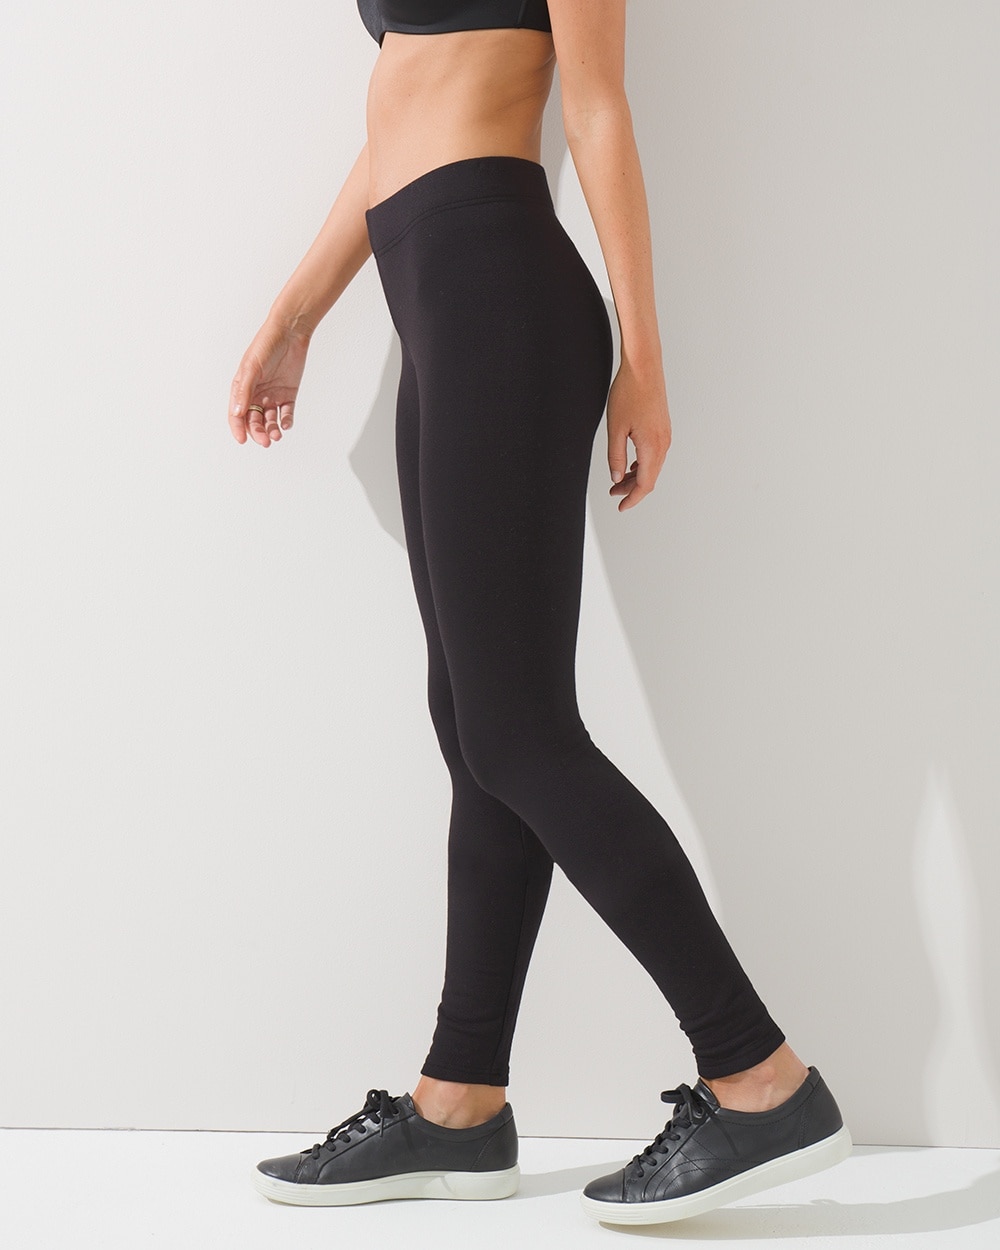 2 x West Loop Size S/M Pants Size 4-8 Black Textured Soft Fleece Leggings